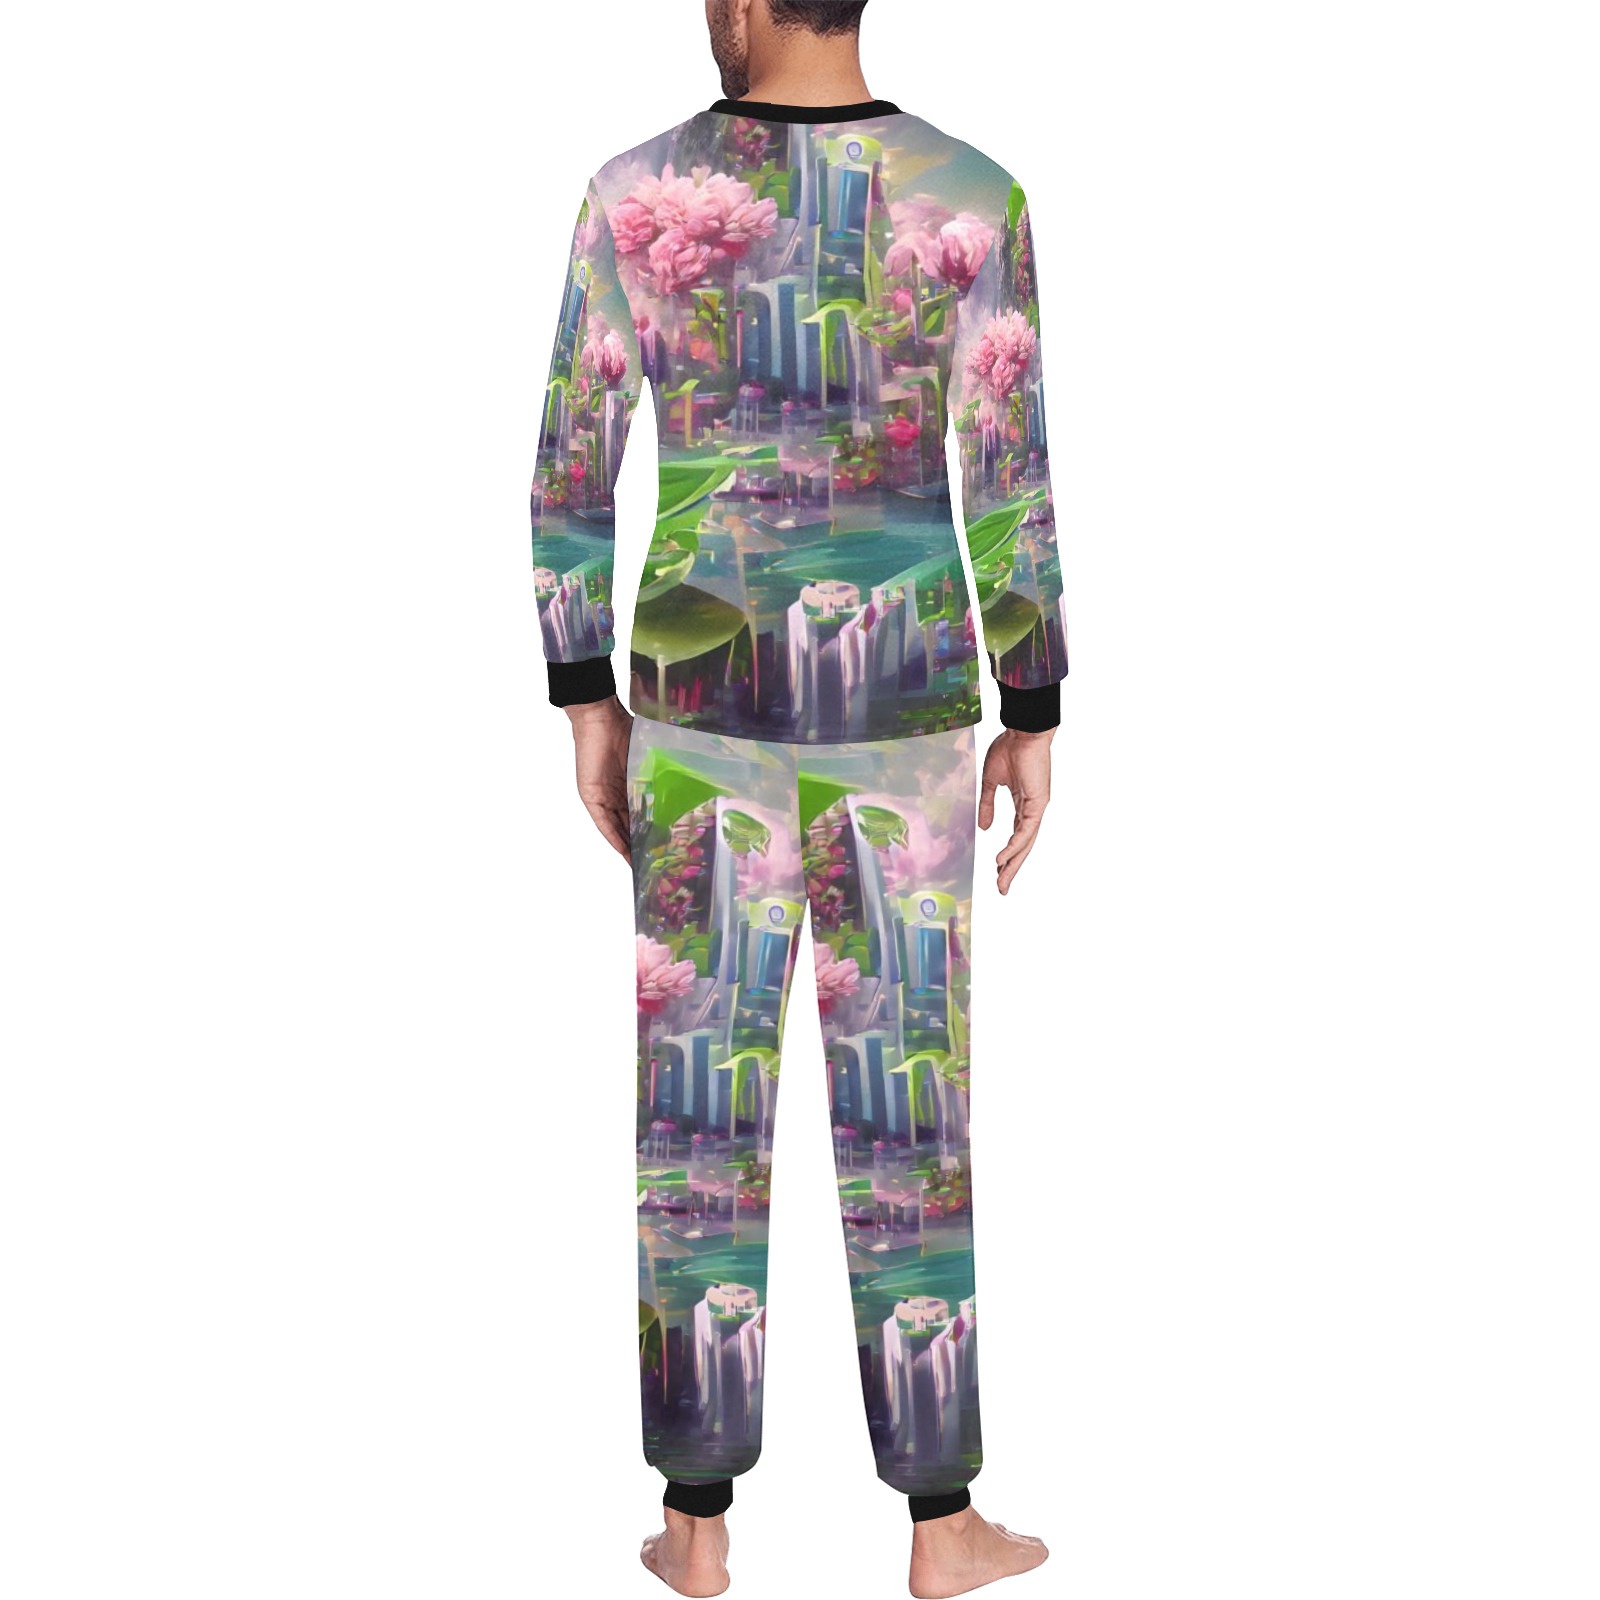 Imagination 010 Men's All Over Print Pajama Set